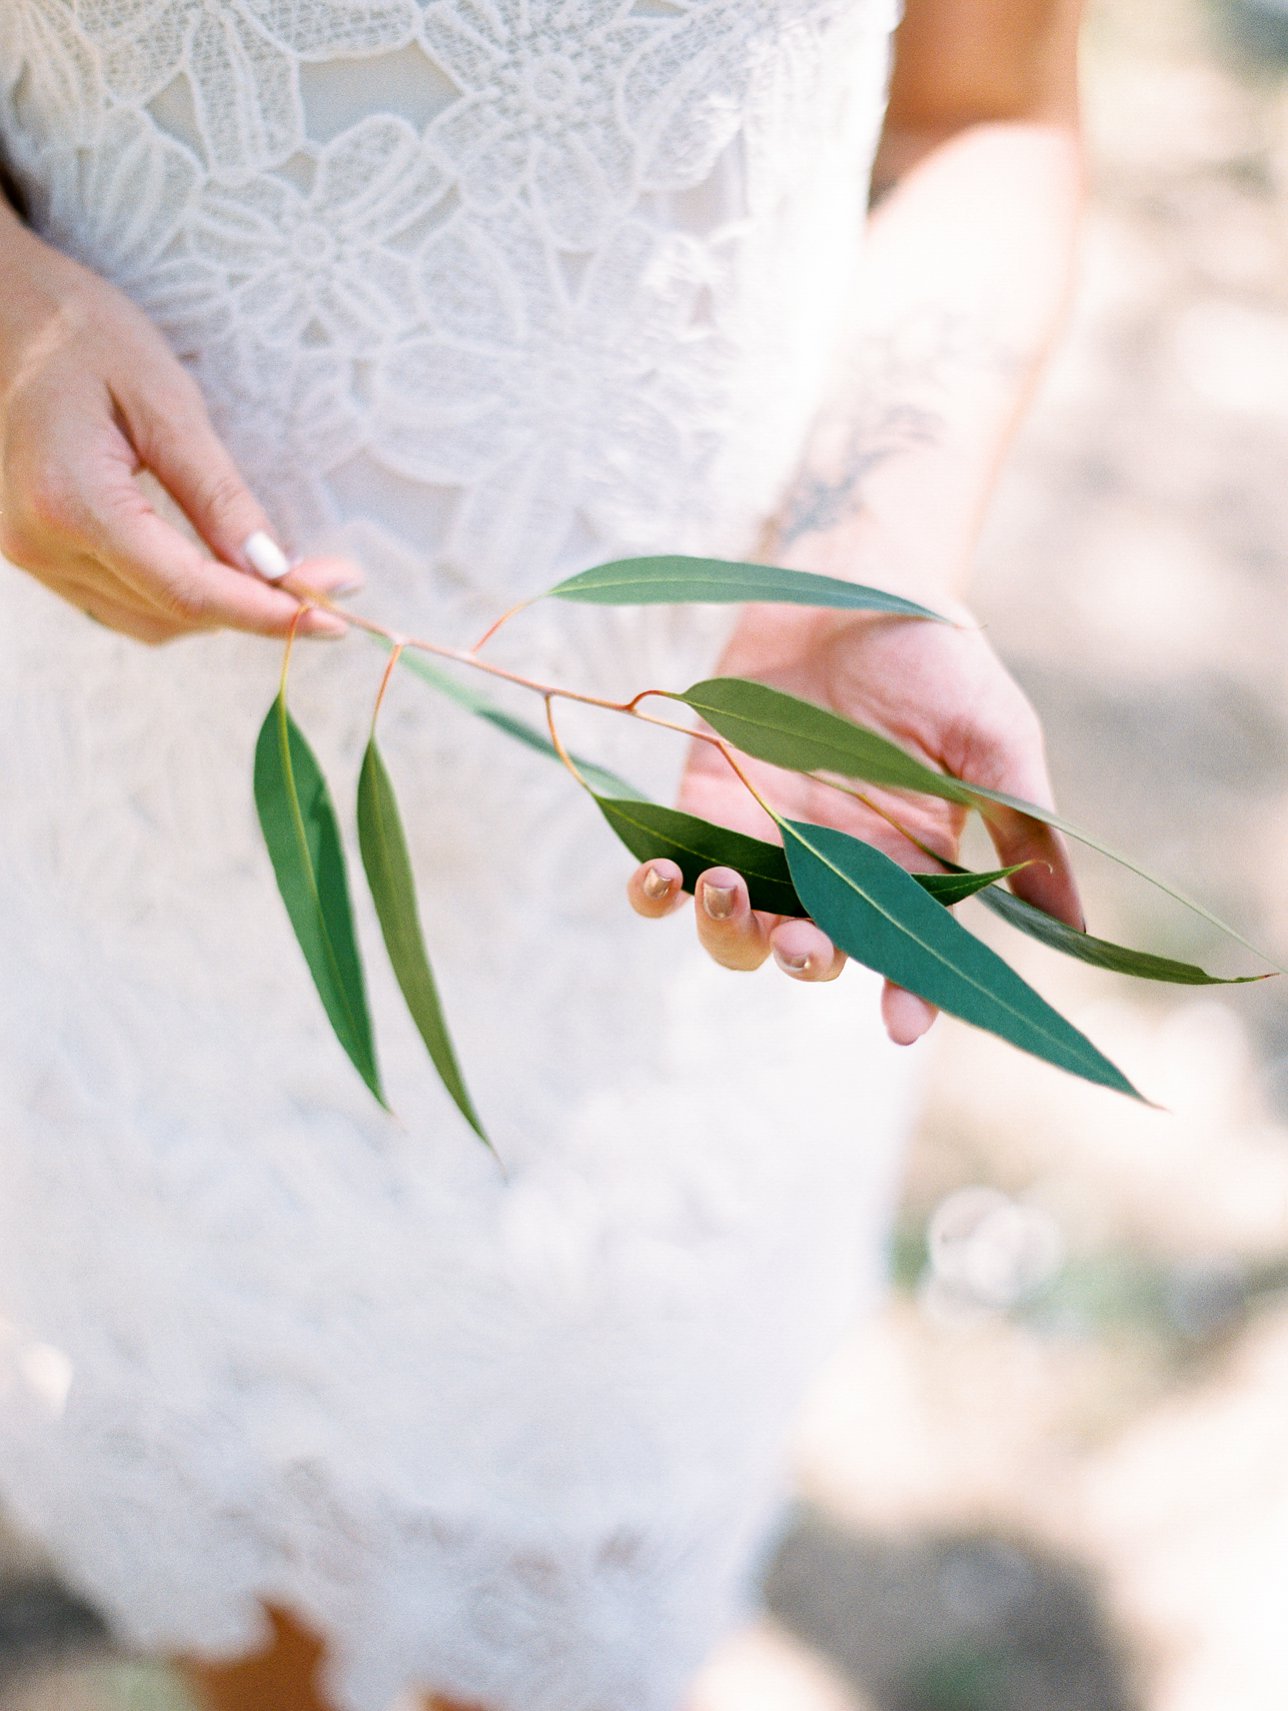 Boyce Thompson Arboretum engagement photos - Scottsdale Wedding Photographer | Rachel Solomon Photography_6640